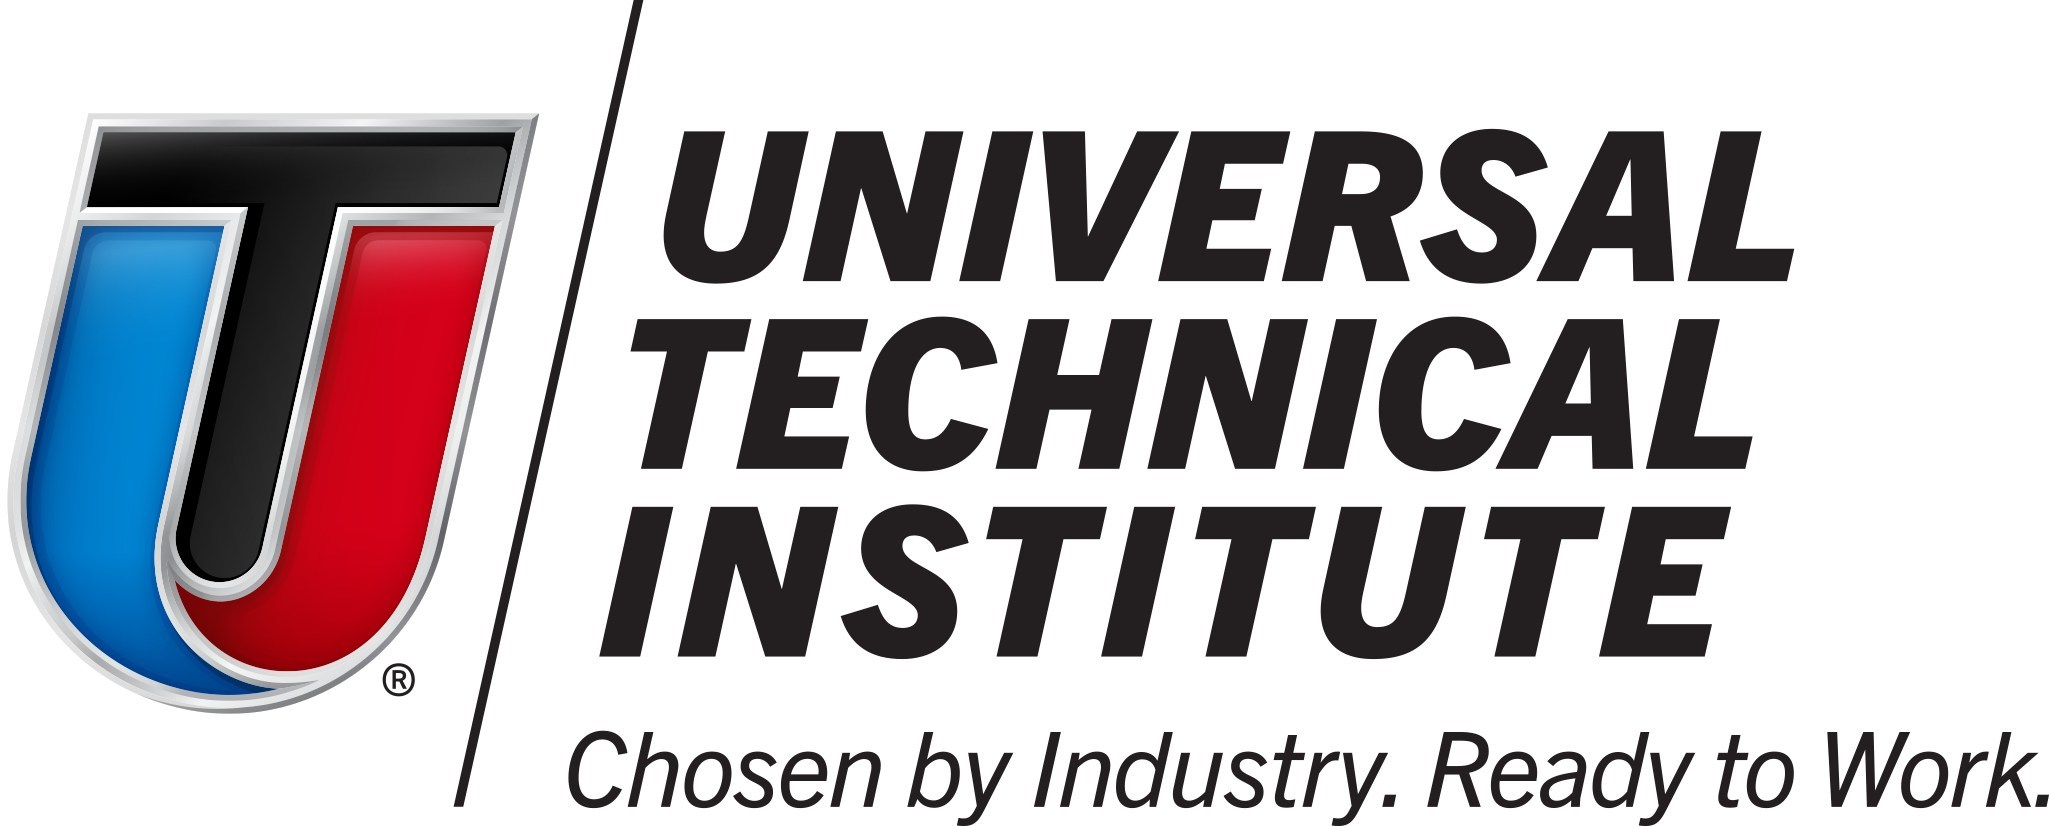 universal-technical-institute-ignite-free-high-school-summer-program